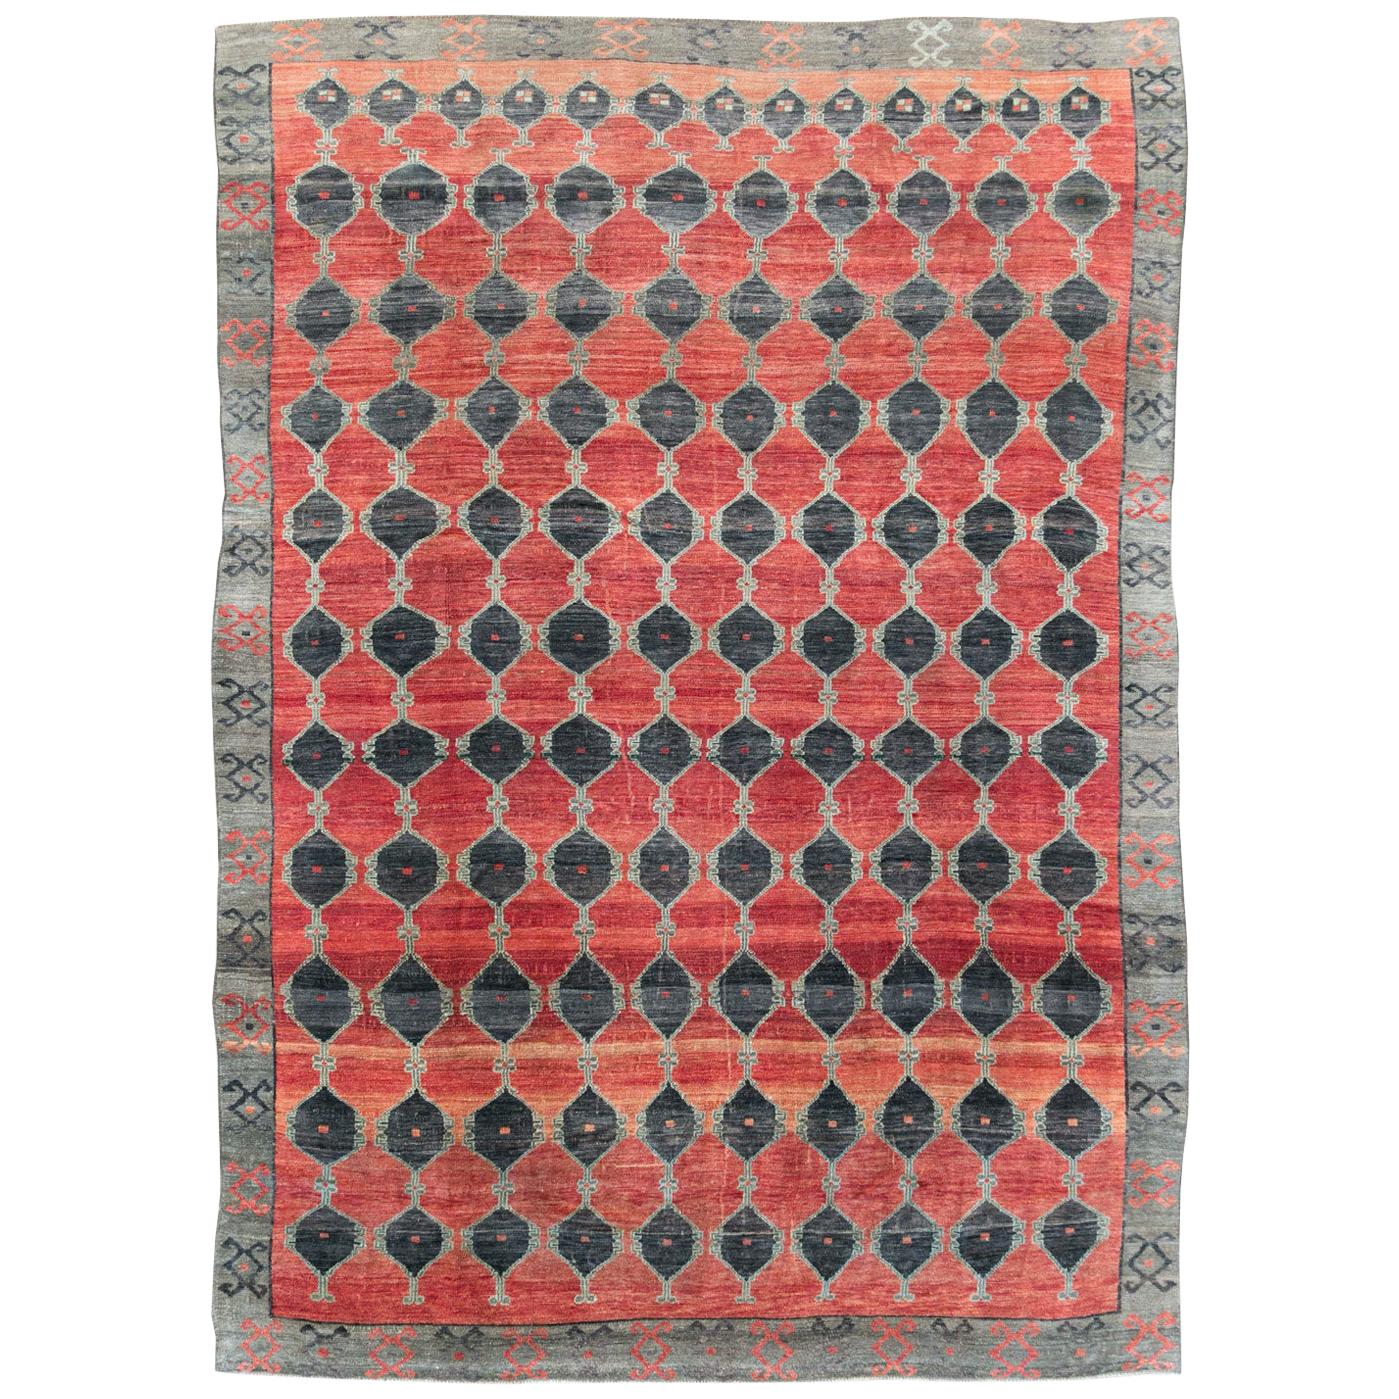 Tribal Mid-20th Century Handmade Turkish Anatolian Room Size Carpet in Red